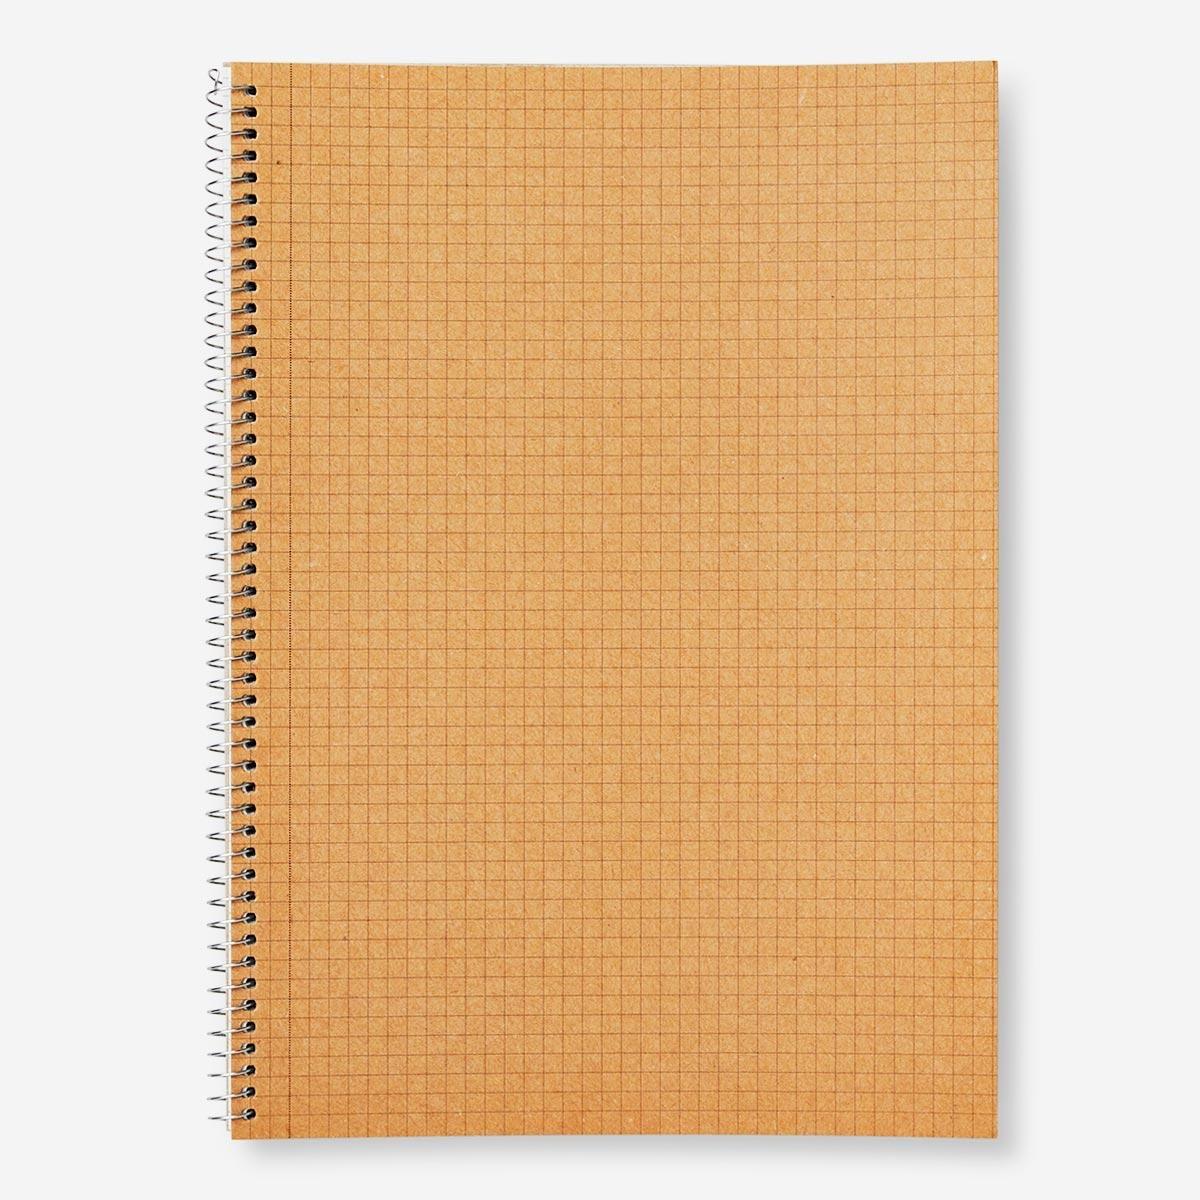 Orange squared paper exercise book. a4